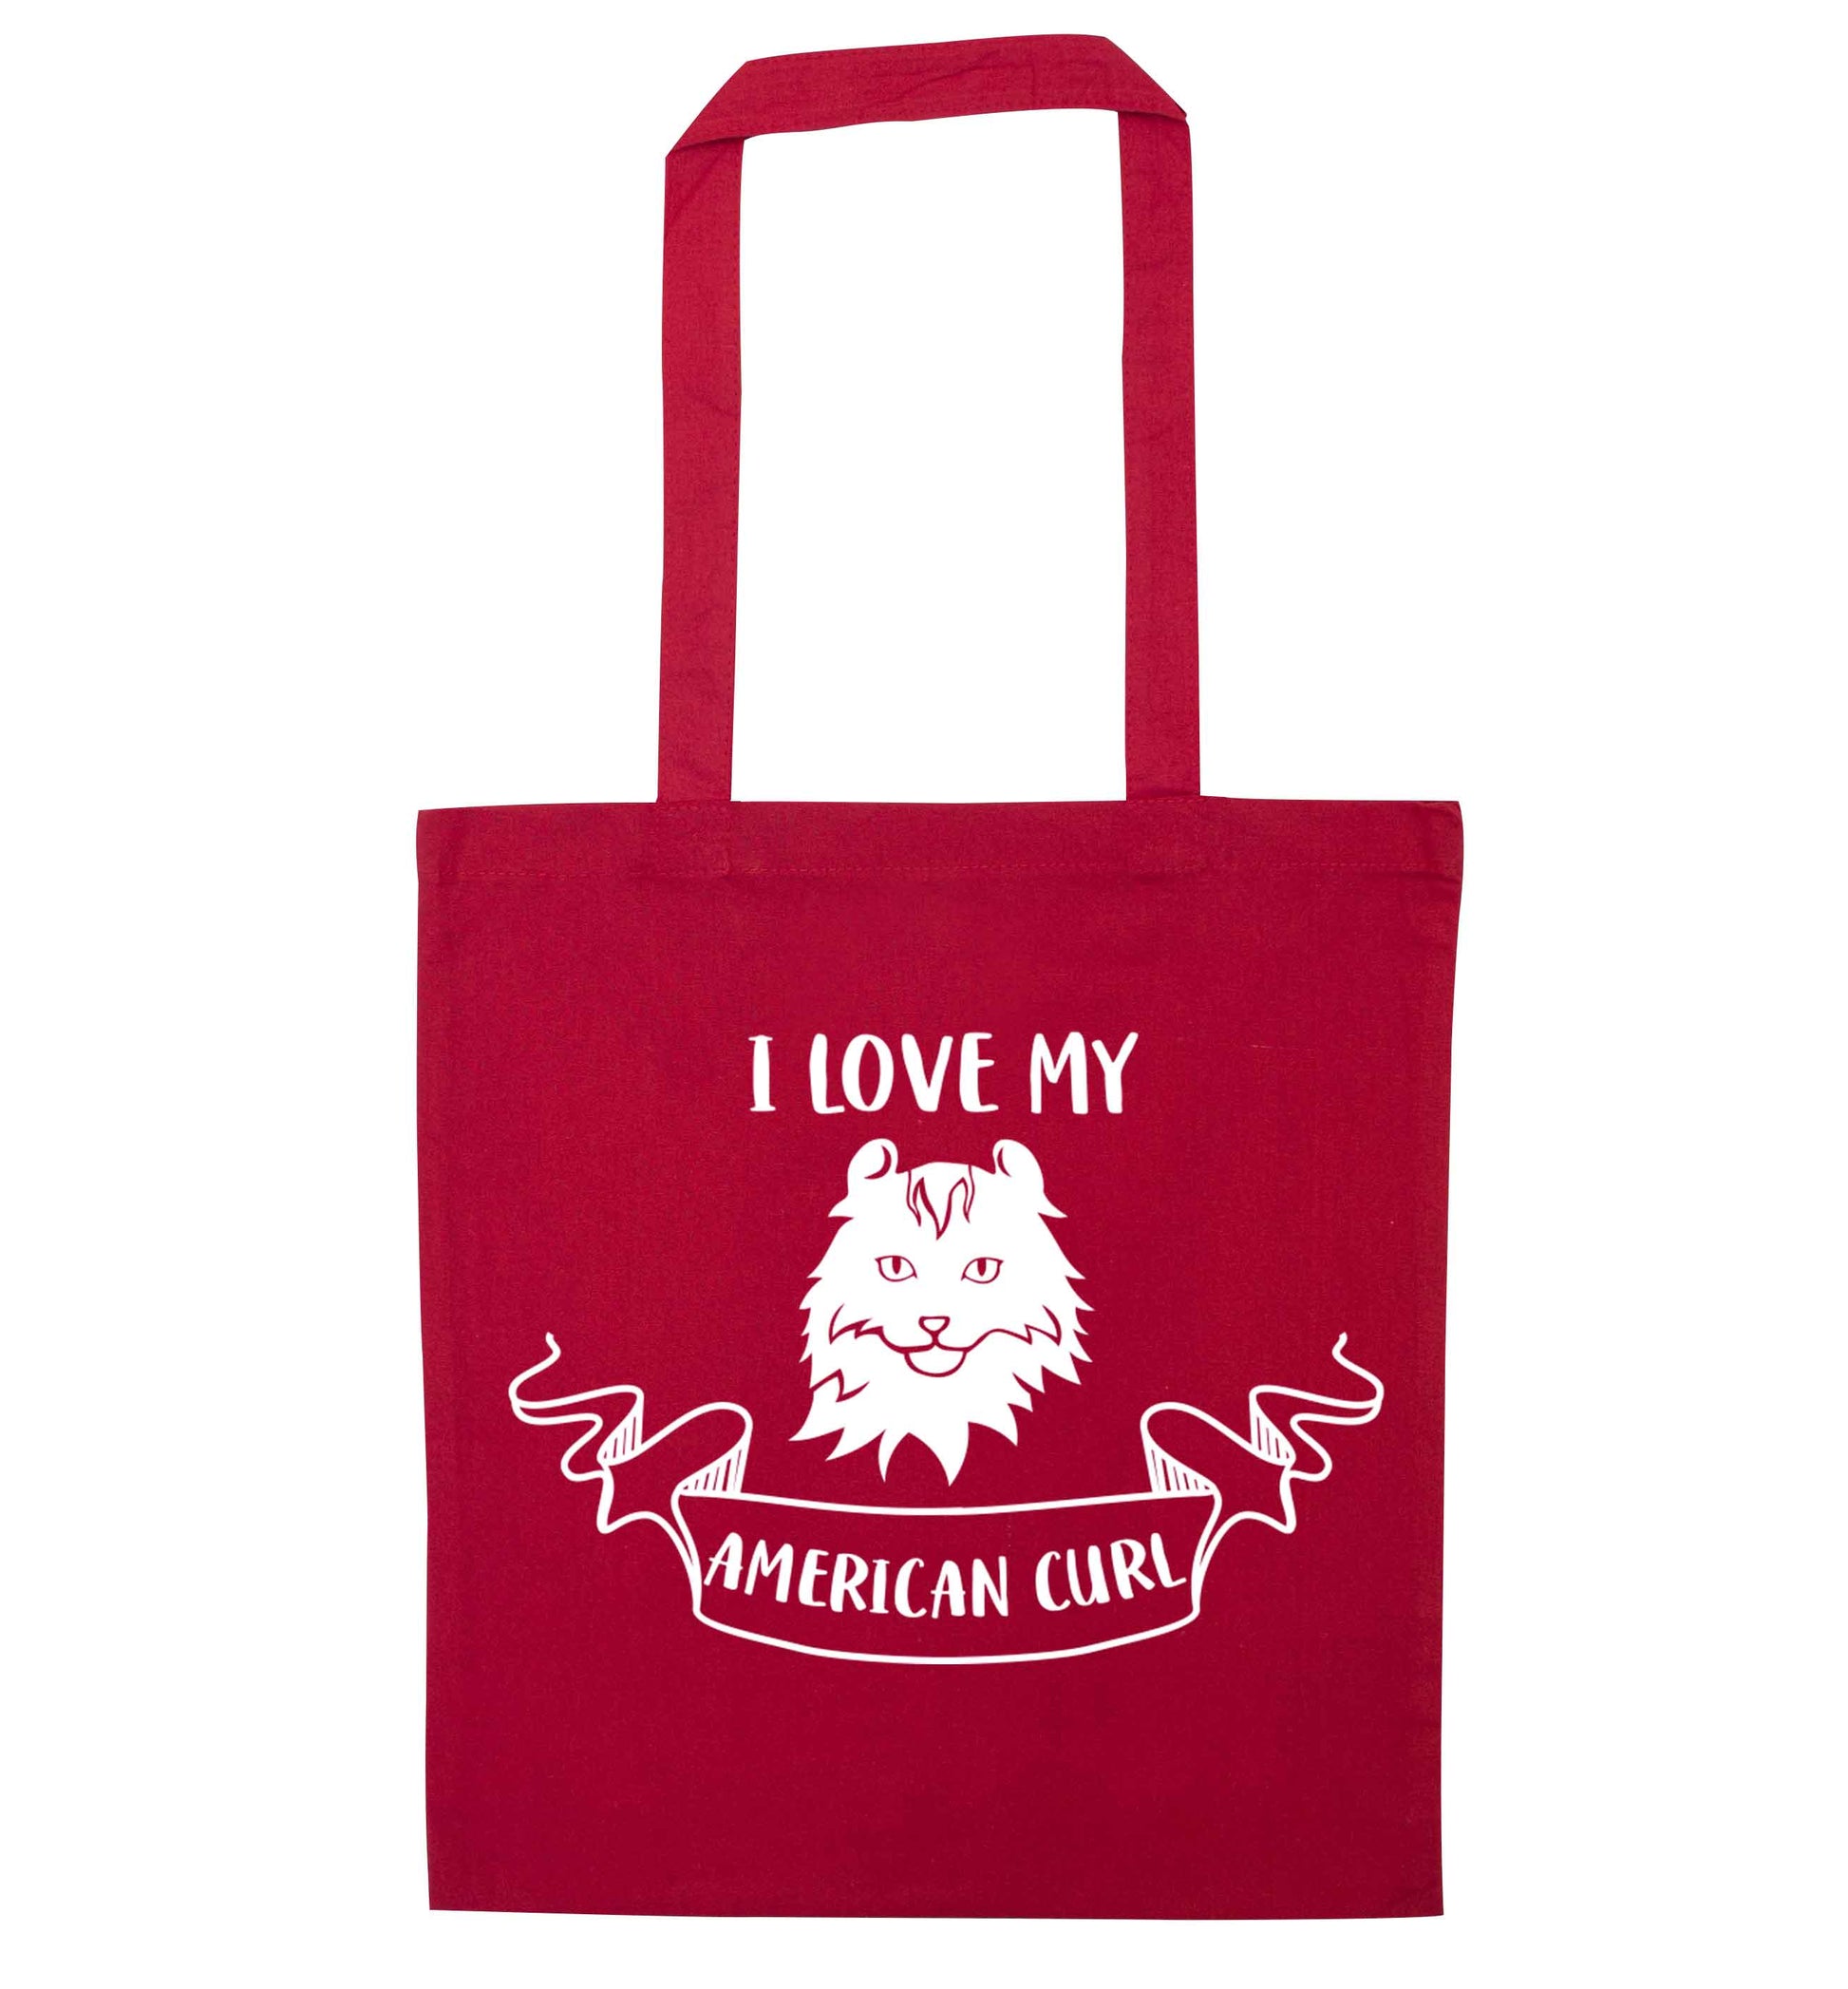 I love my American curl red tote bag